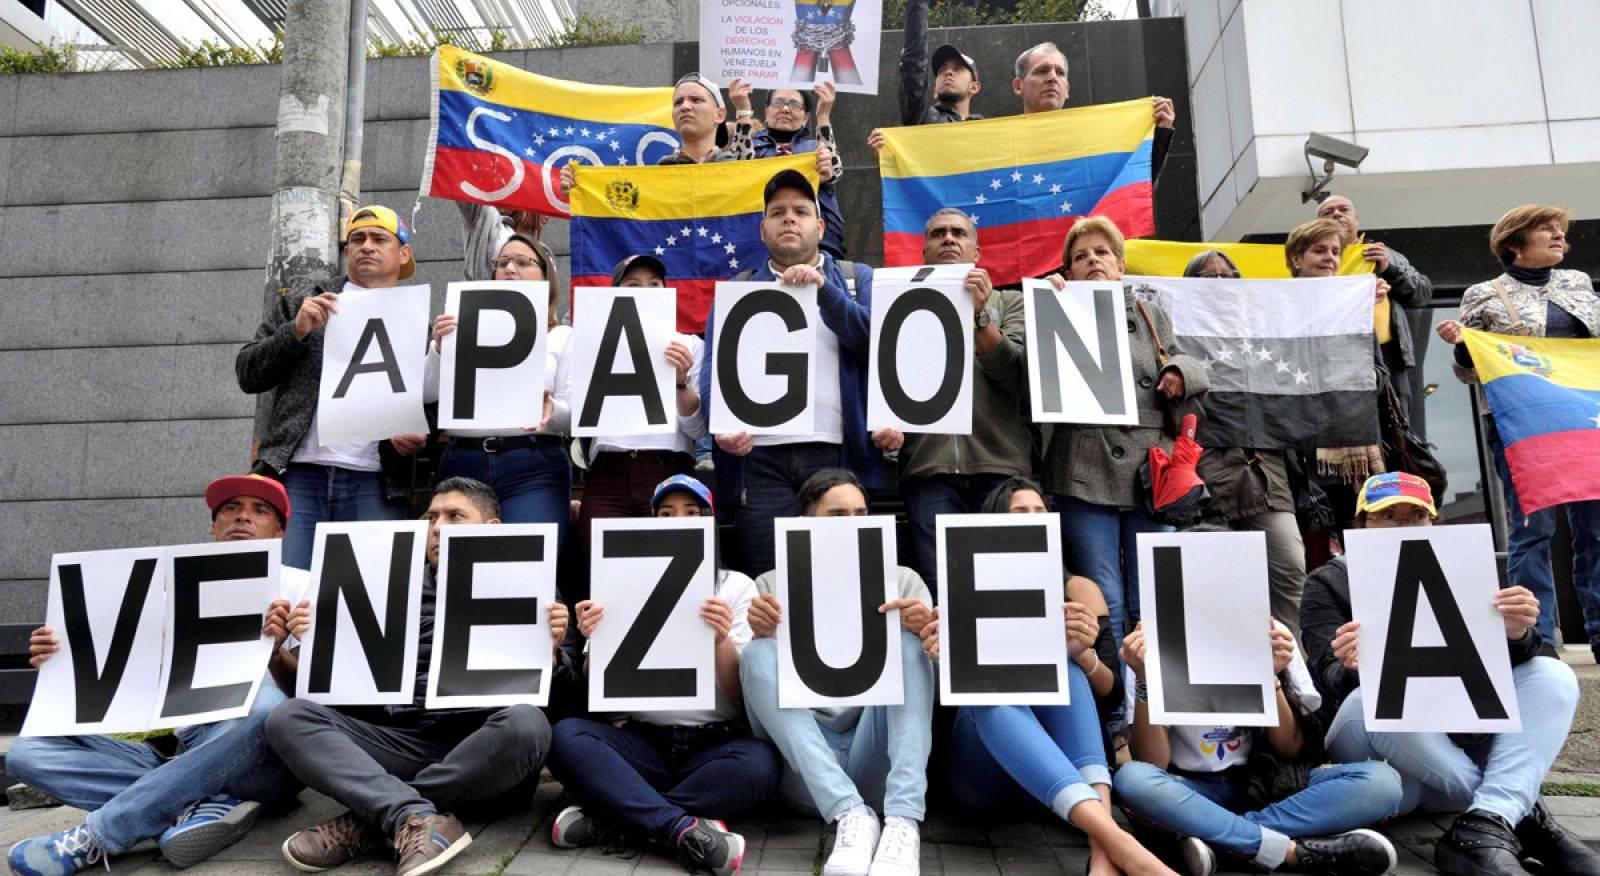 Venezuelan citizens living in Bogota protest against Venezuela's President Maduro and the power outage in Venezuela